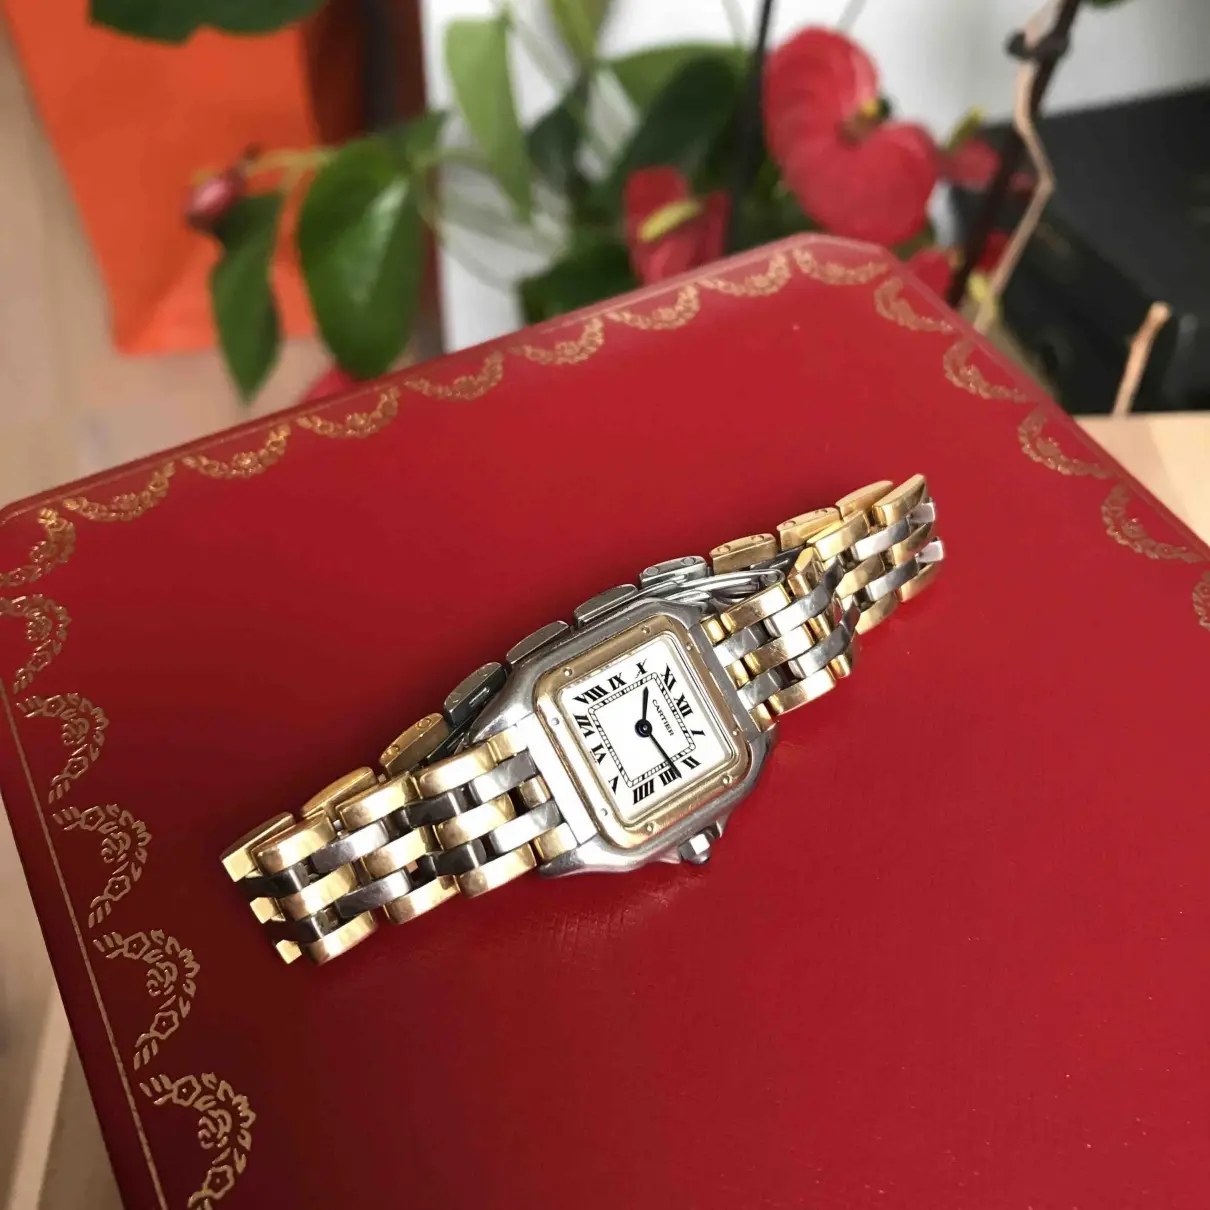 Buy Cartier Panthère watch online - Vintage